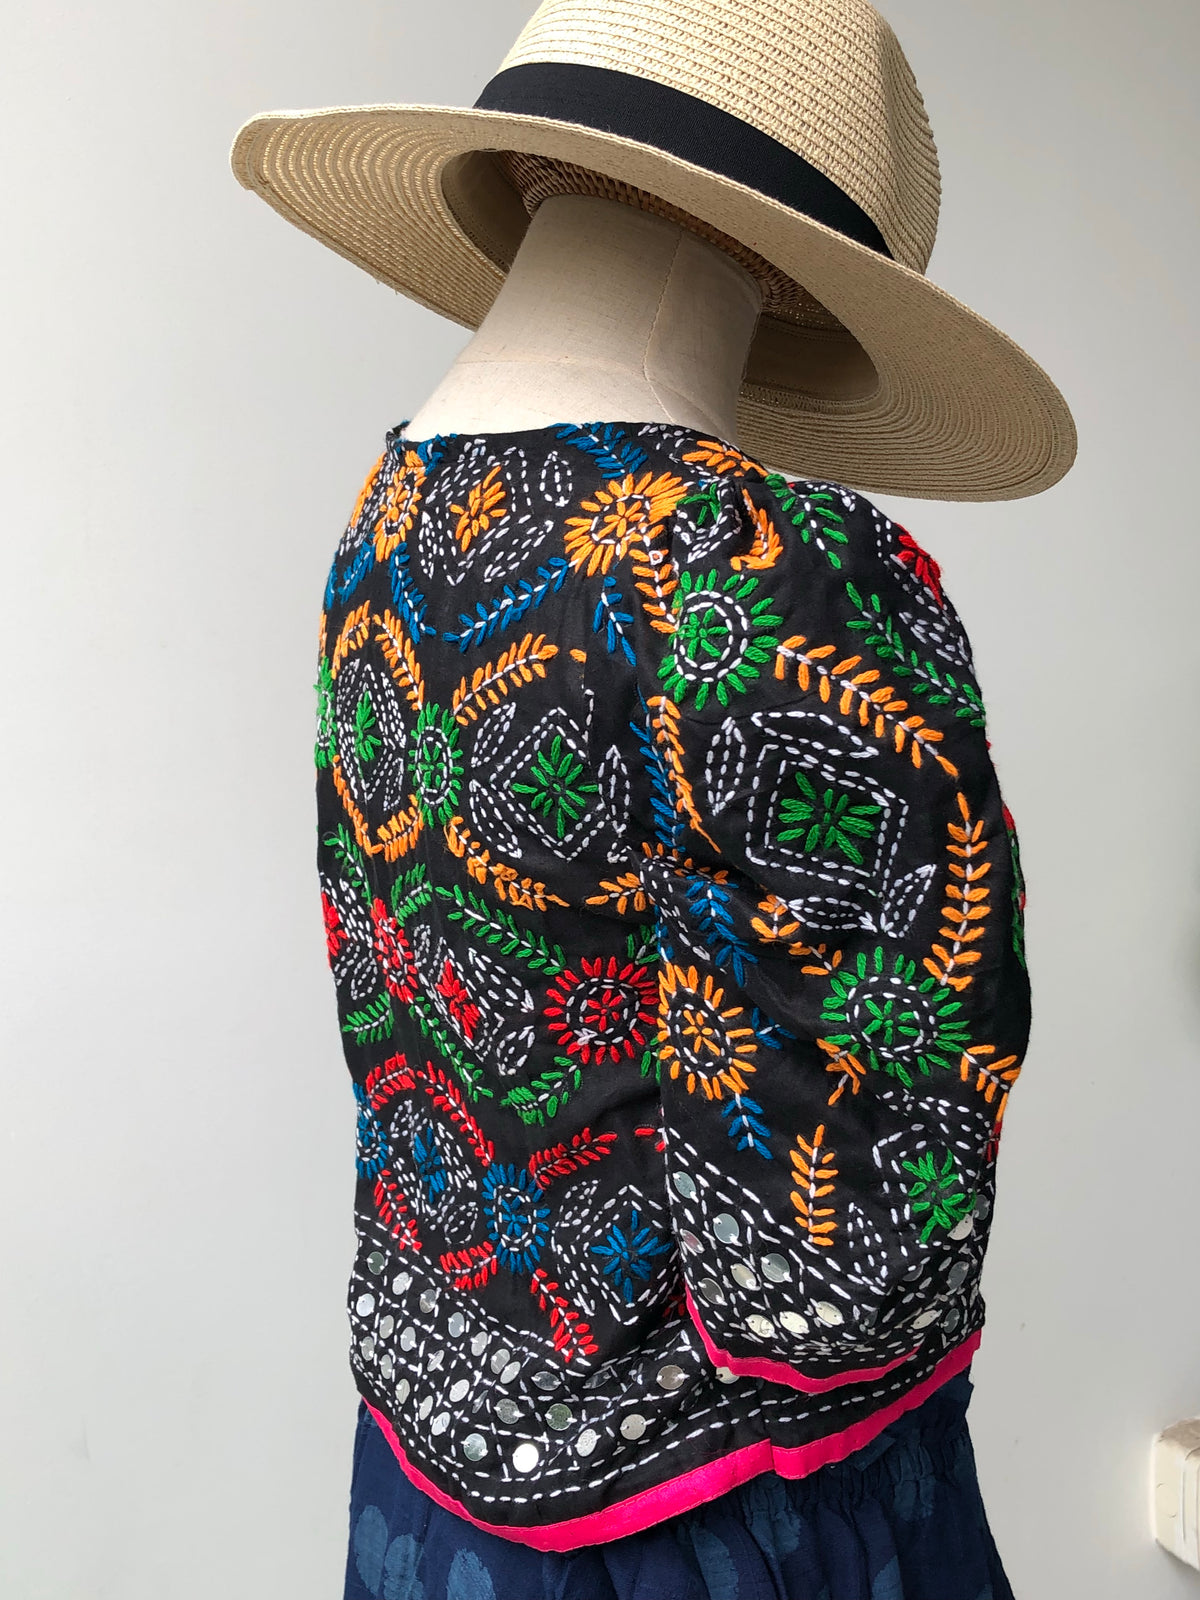 Gifara Hand Embroidered Top